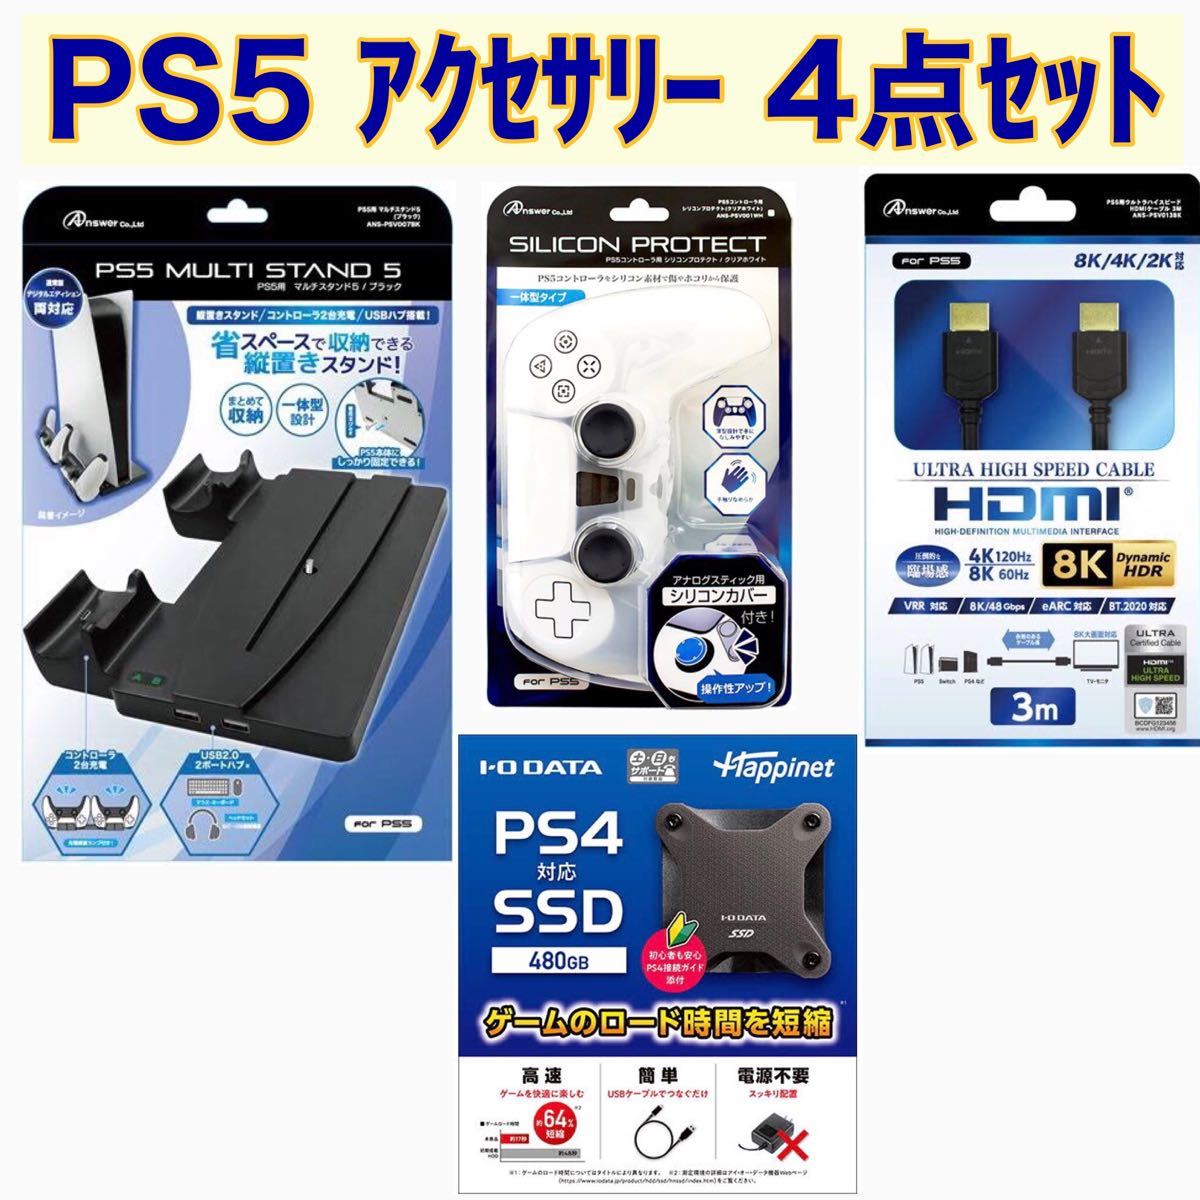 PS5 アクセサリーセット マルチスタンド5 シリコンプロテクト SSD480G HDMIケーブル PlayStation5